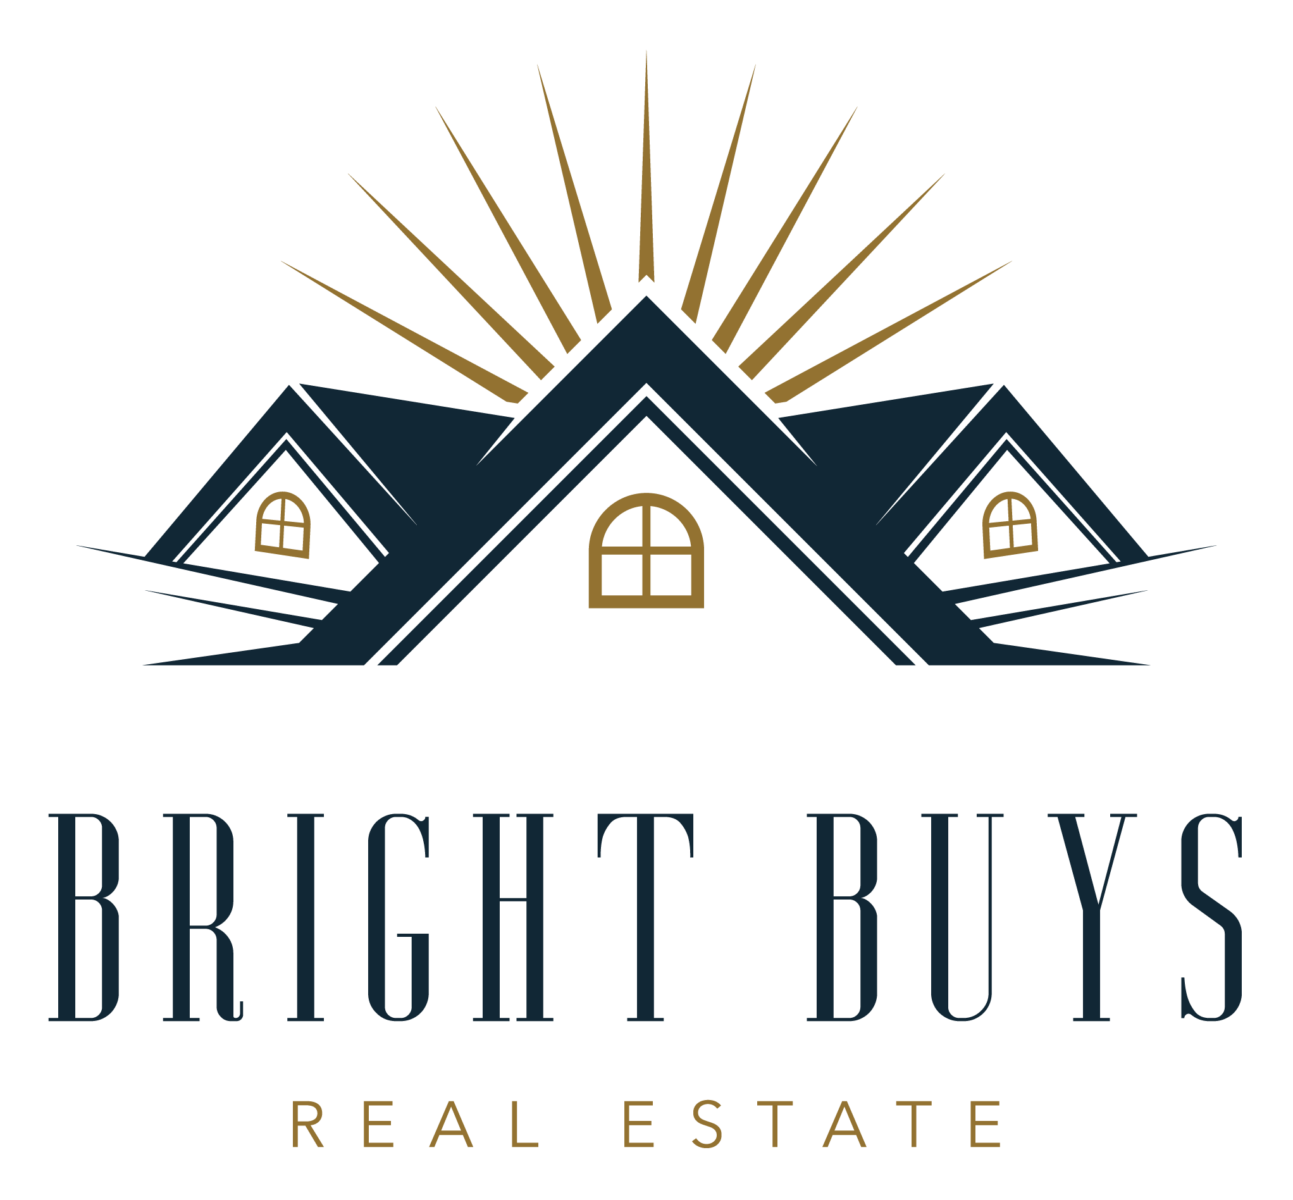 Bright Buys Real Estate logo